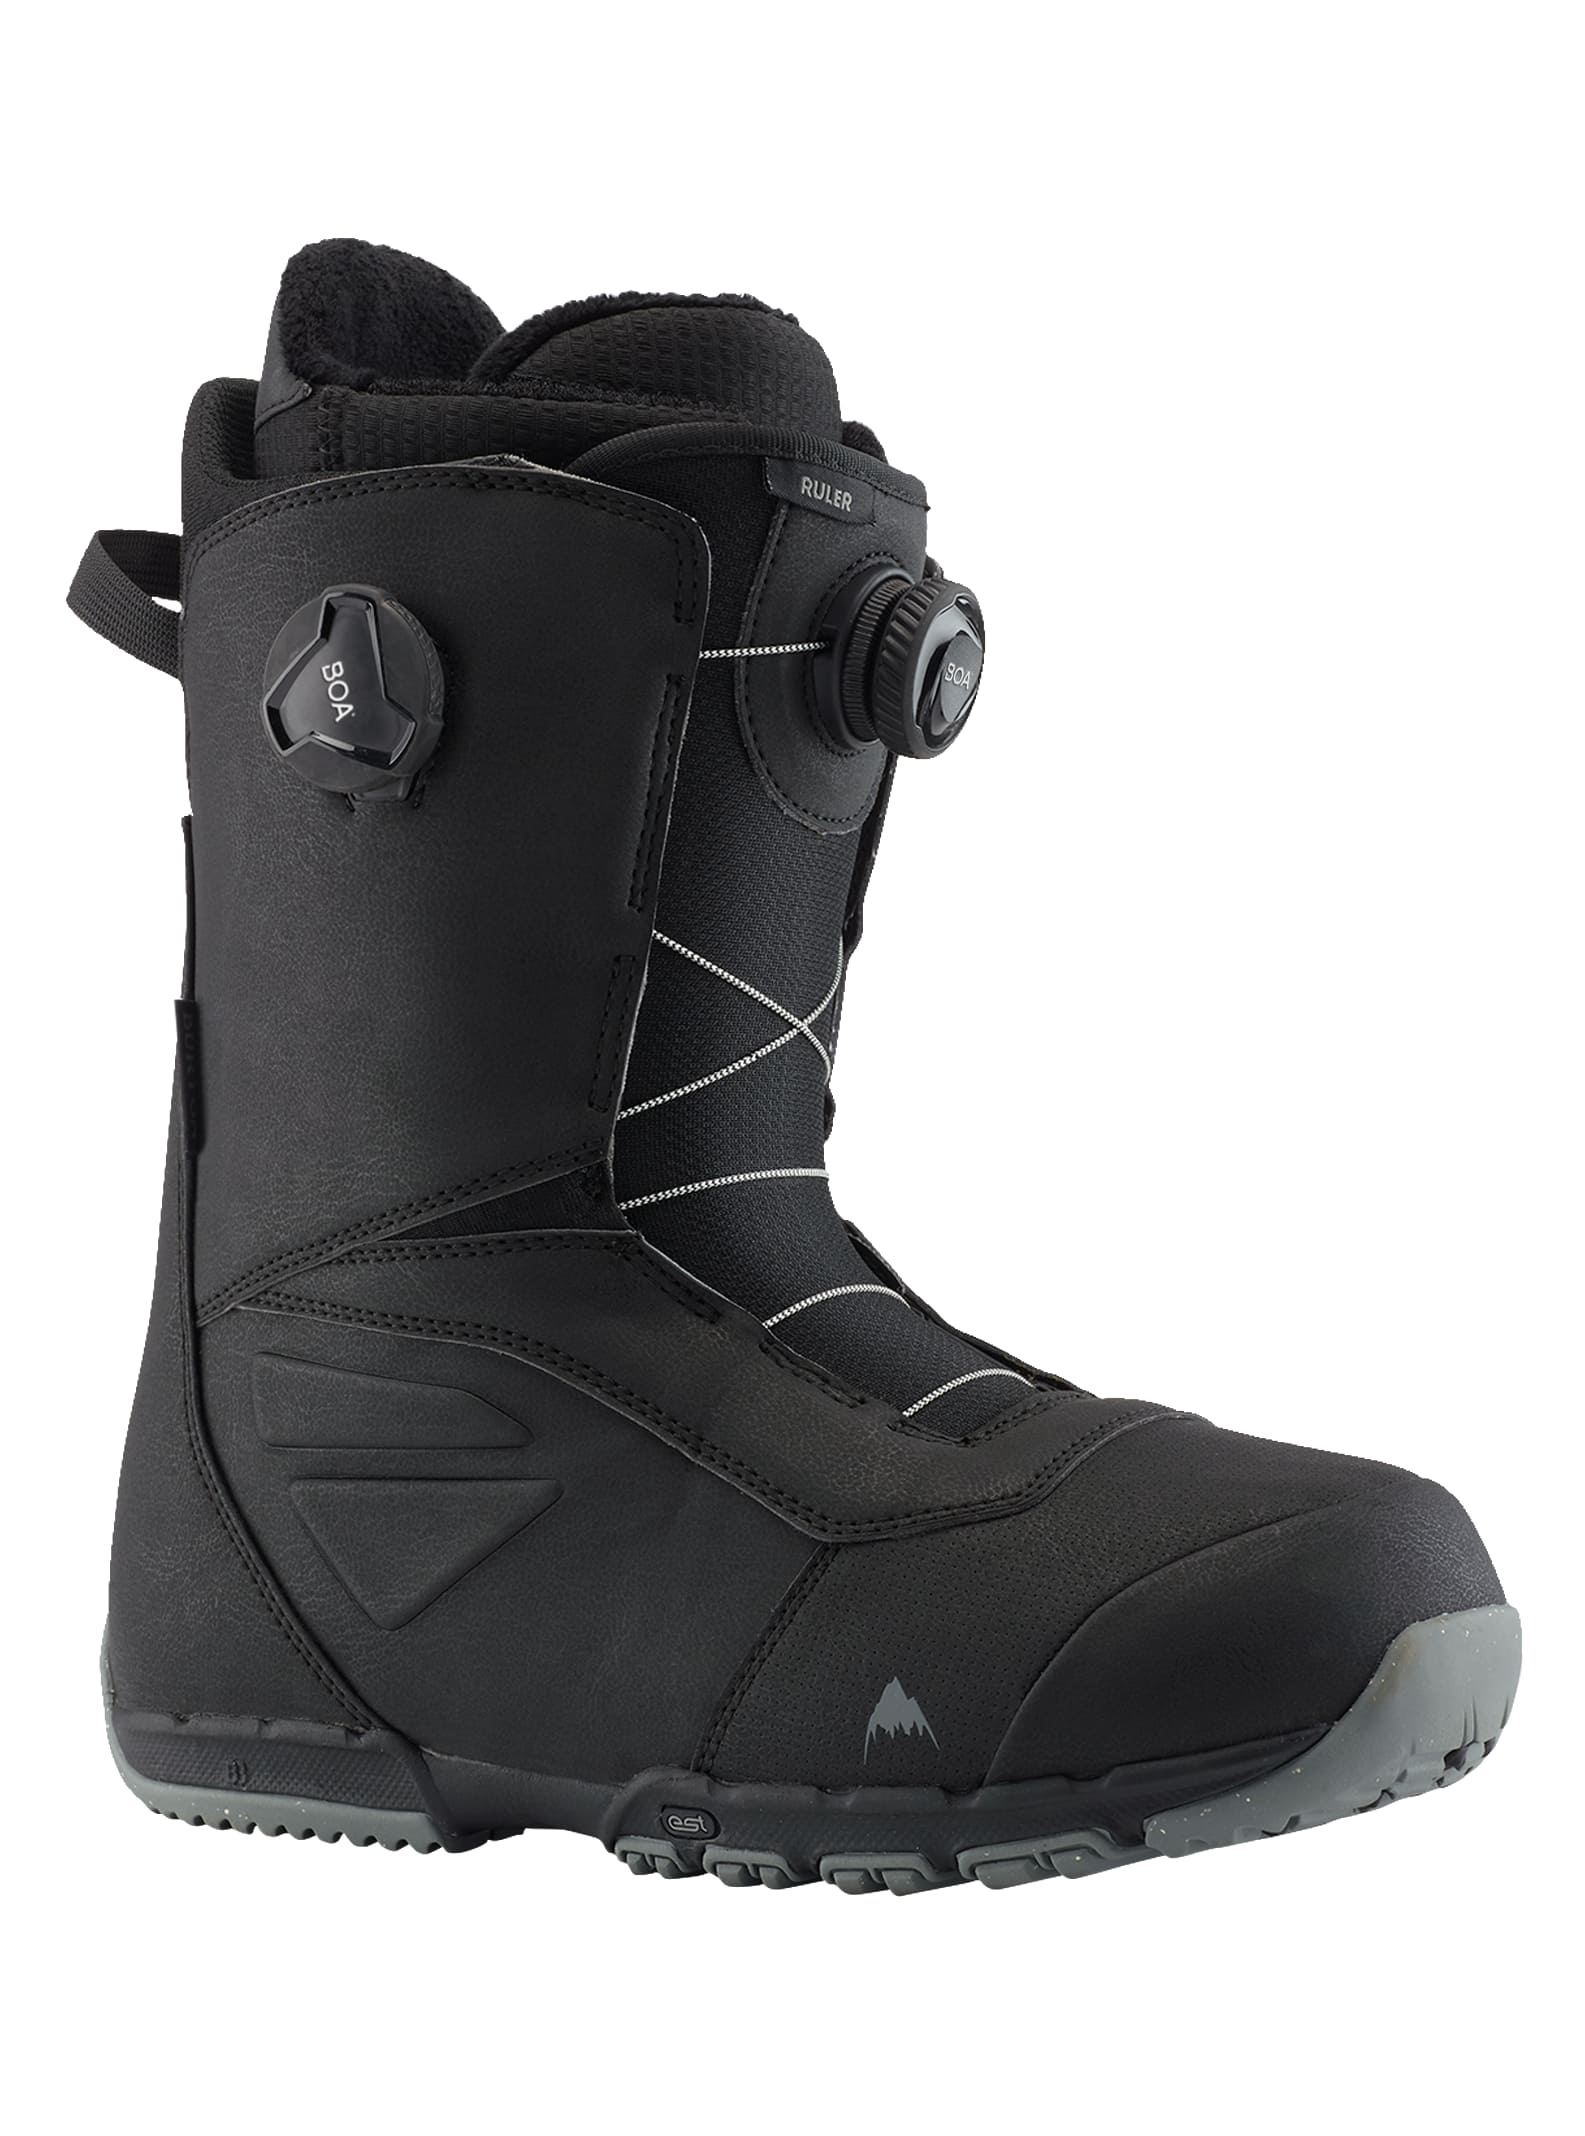 Burton Men's Burton Ruler BOA® Snowboard Boots Black